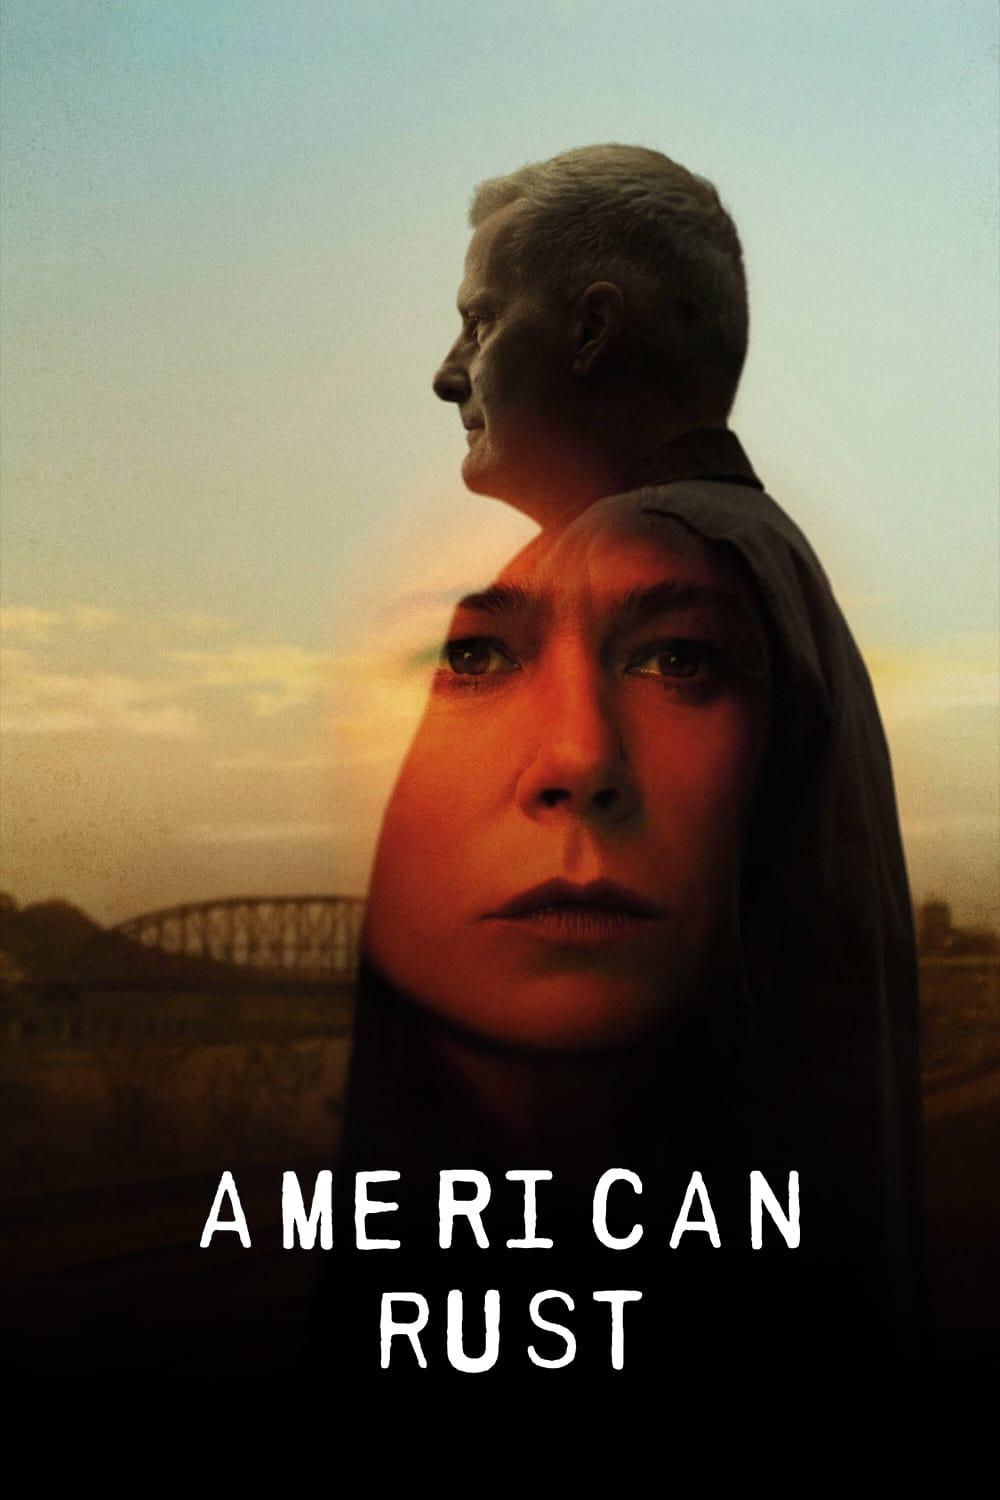 American Rust poster